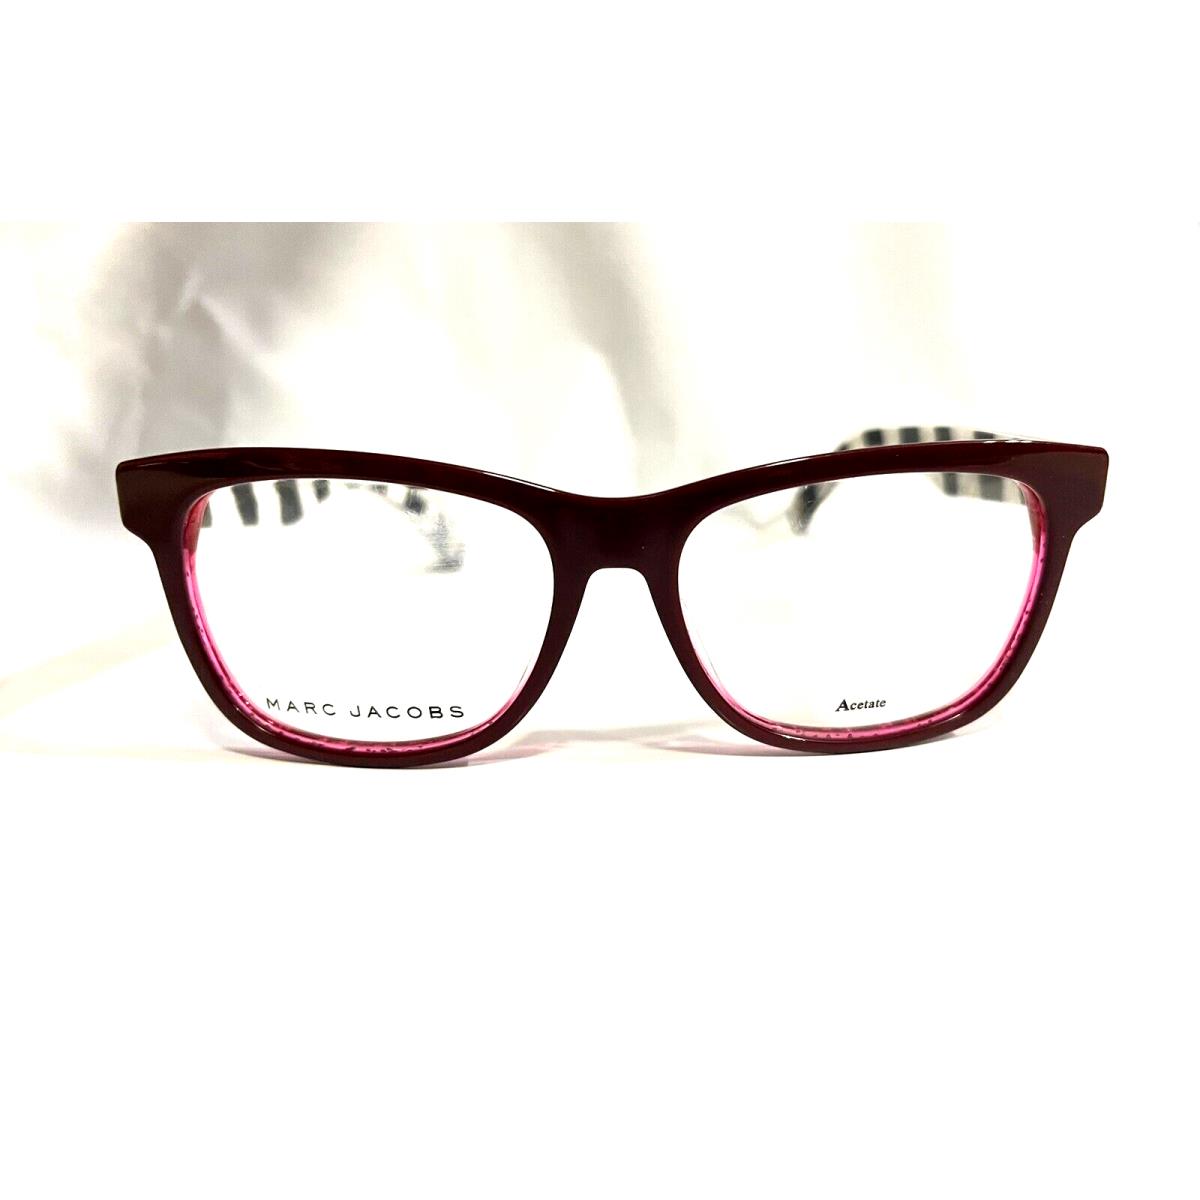 Marc Jacobs eyeglasses OSW - Burgundy Frame 4